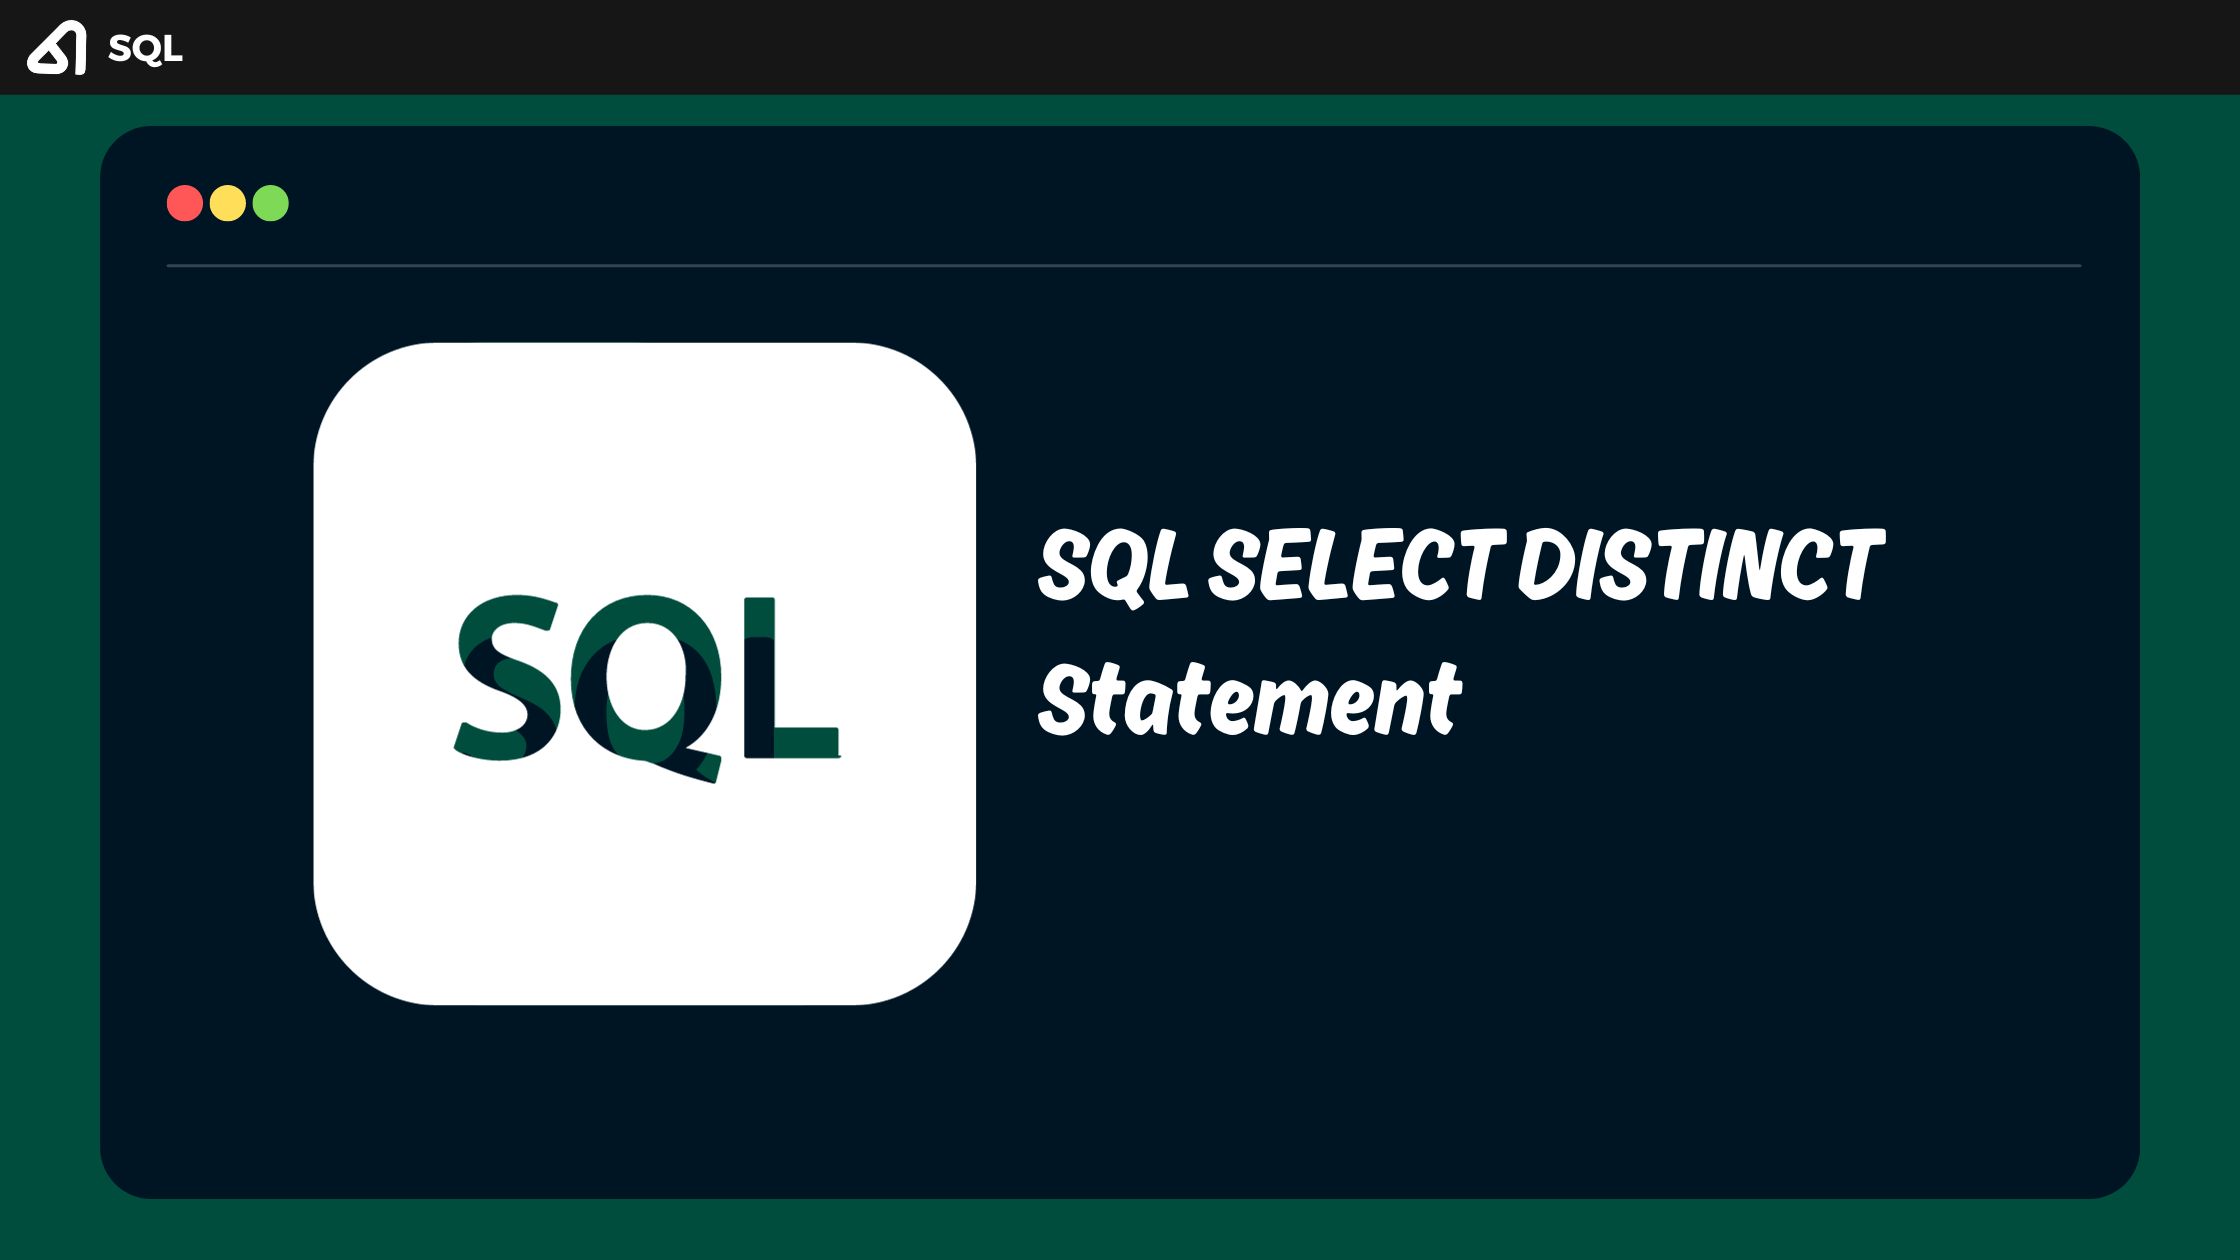 Statement SQL SELECT DISTINCT